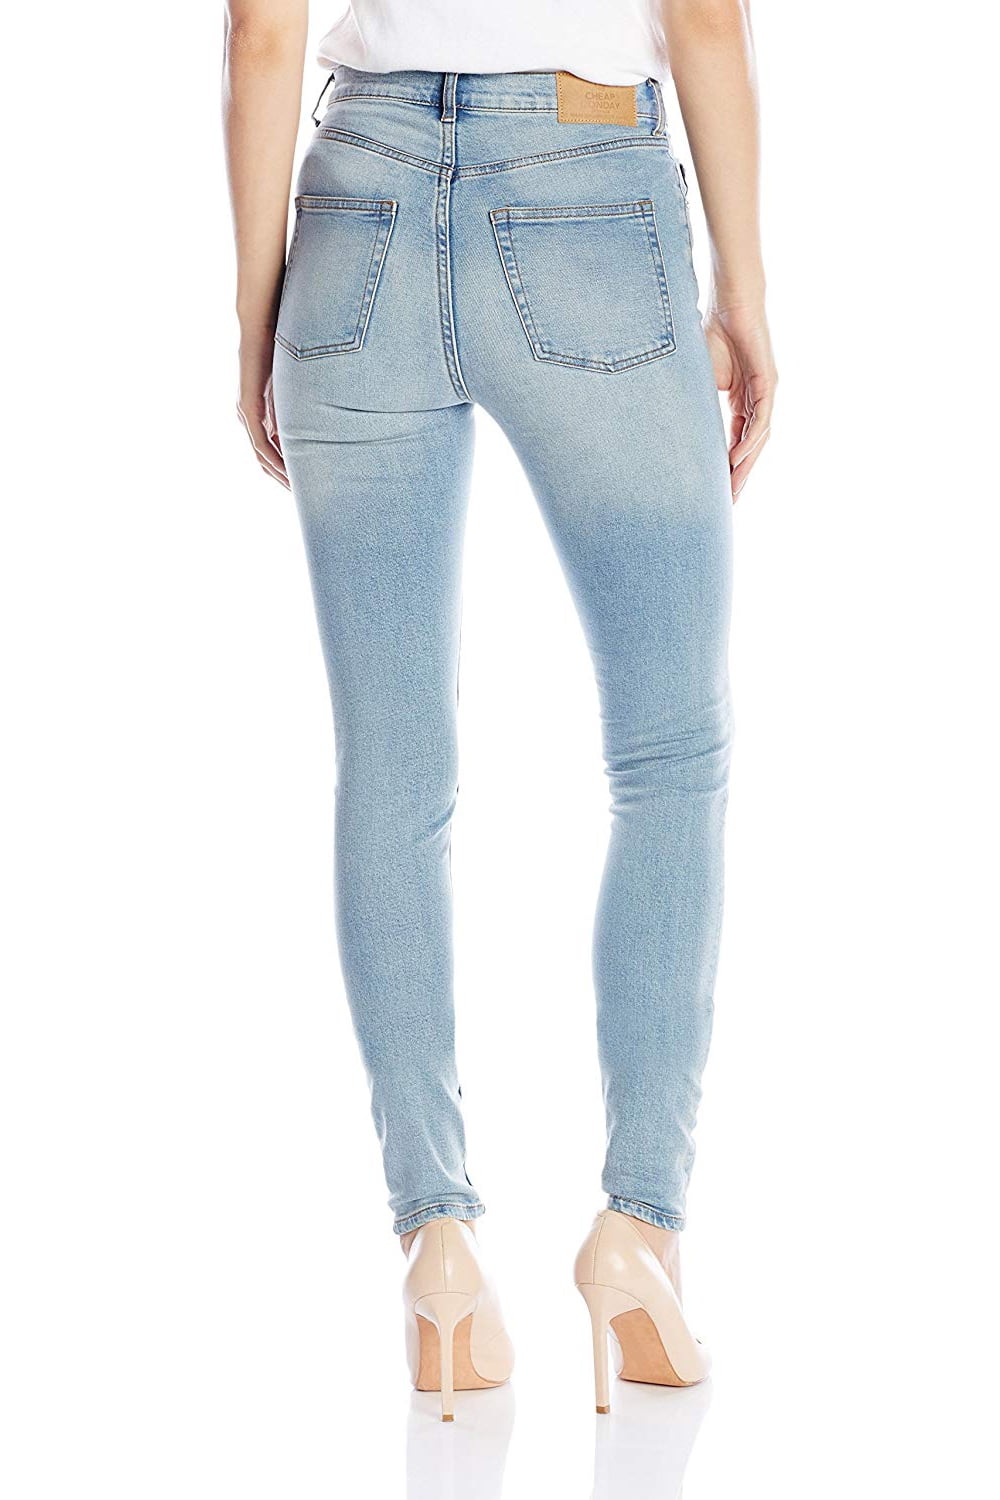 nylon Forventer Udvalg CHEAP MONDAY Women's Second Skin Jeans, Stonewash Blue, 25x32 - Walmart.com